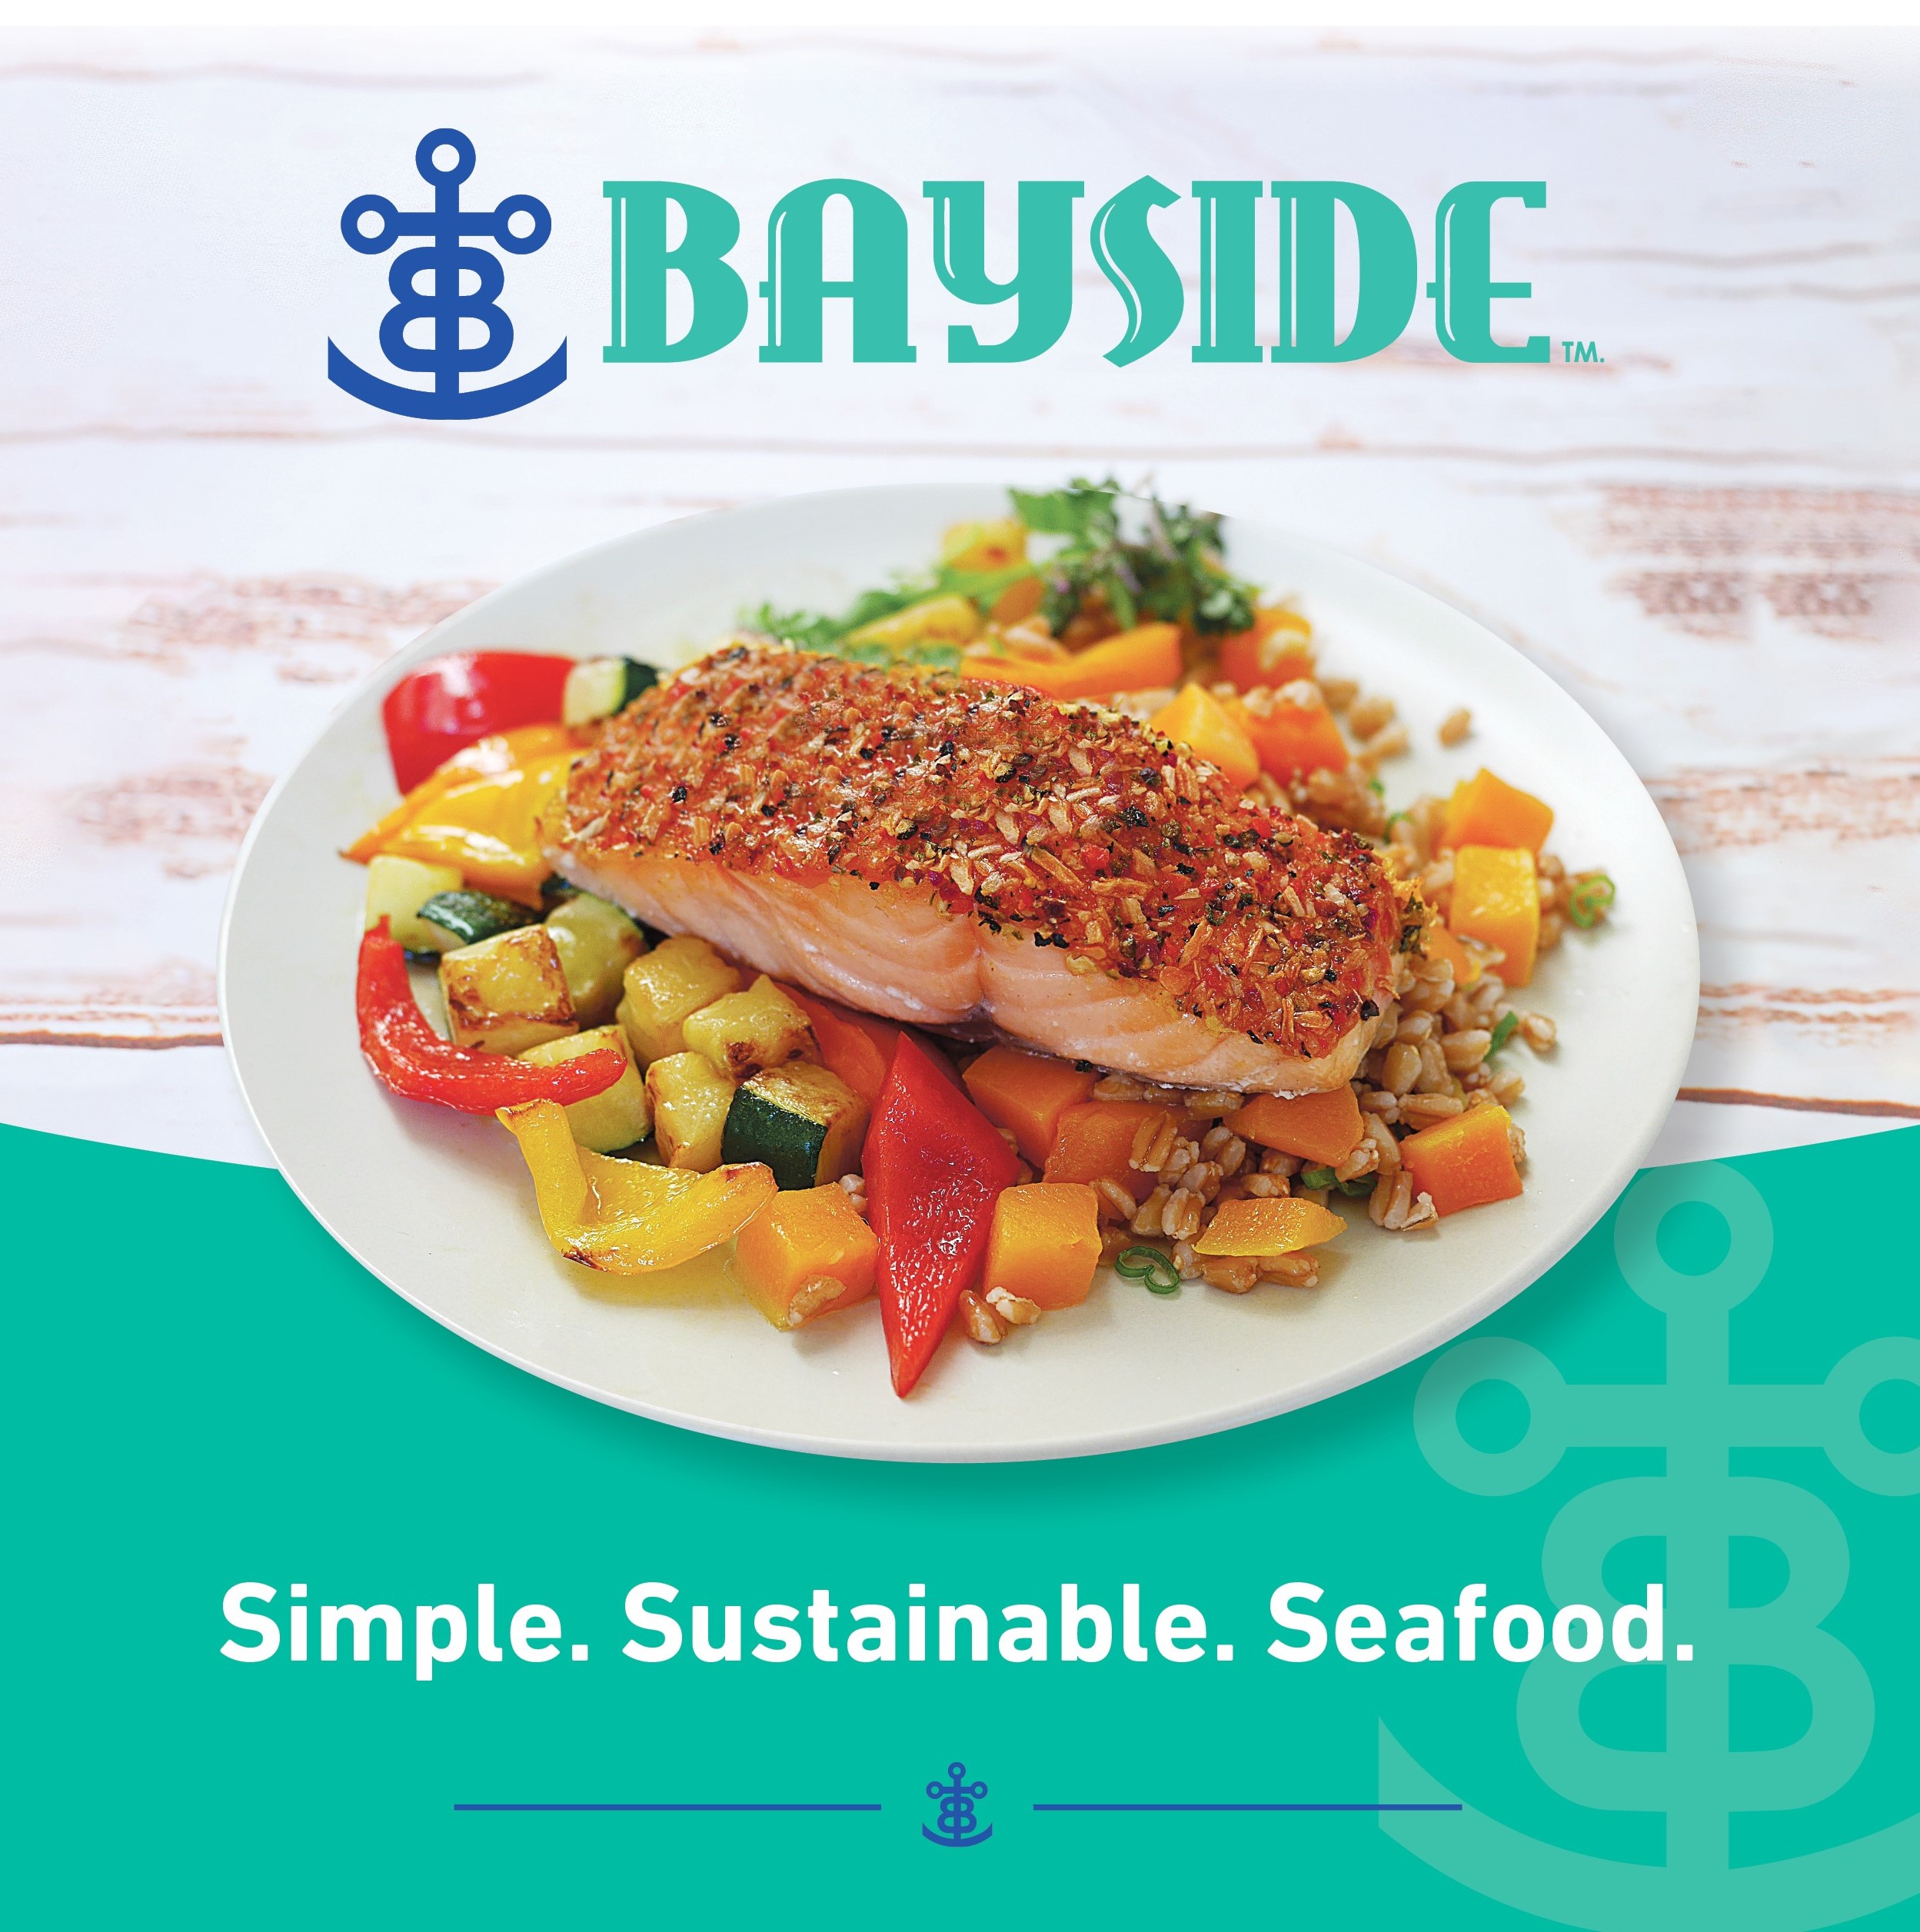 Stock your seafood display with the Bayside Seafood brand